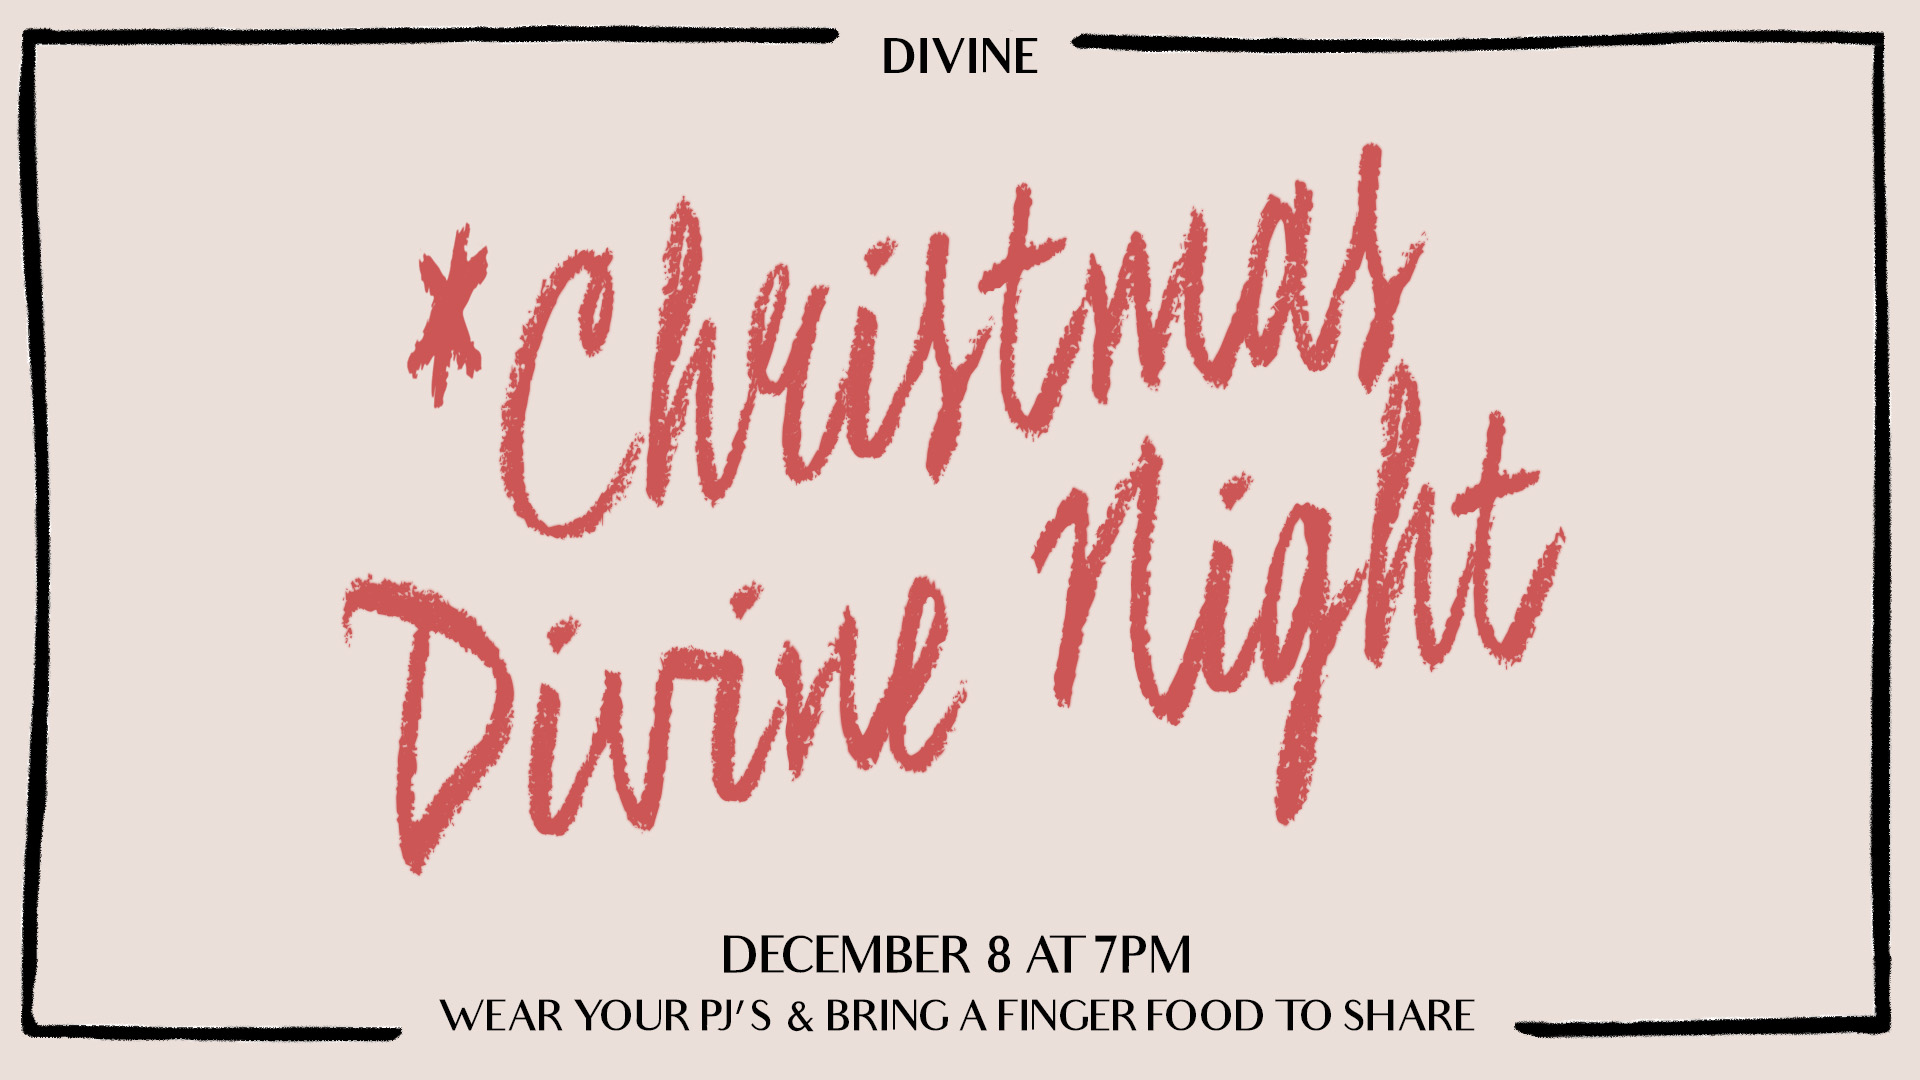 DIVINE: Christmas Night at the Gwinnett campus